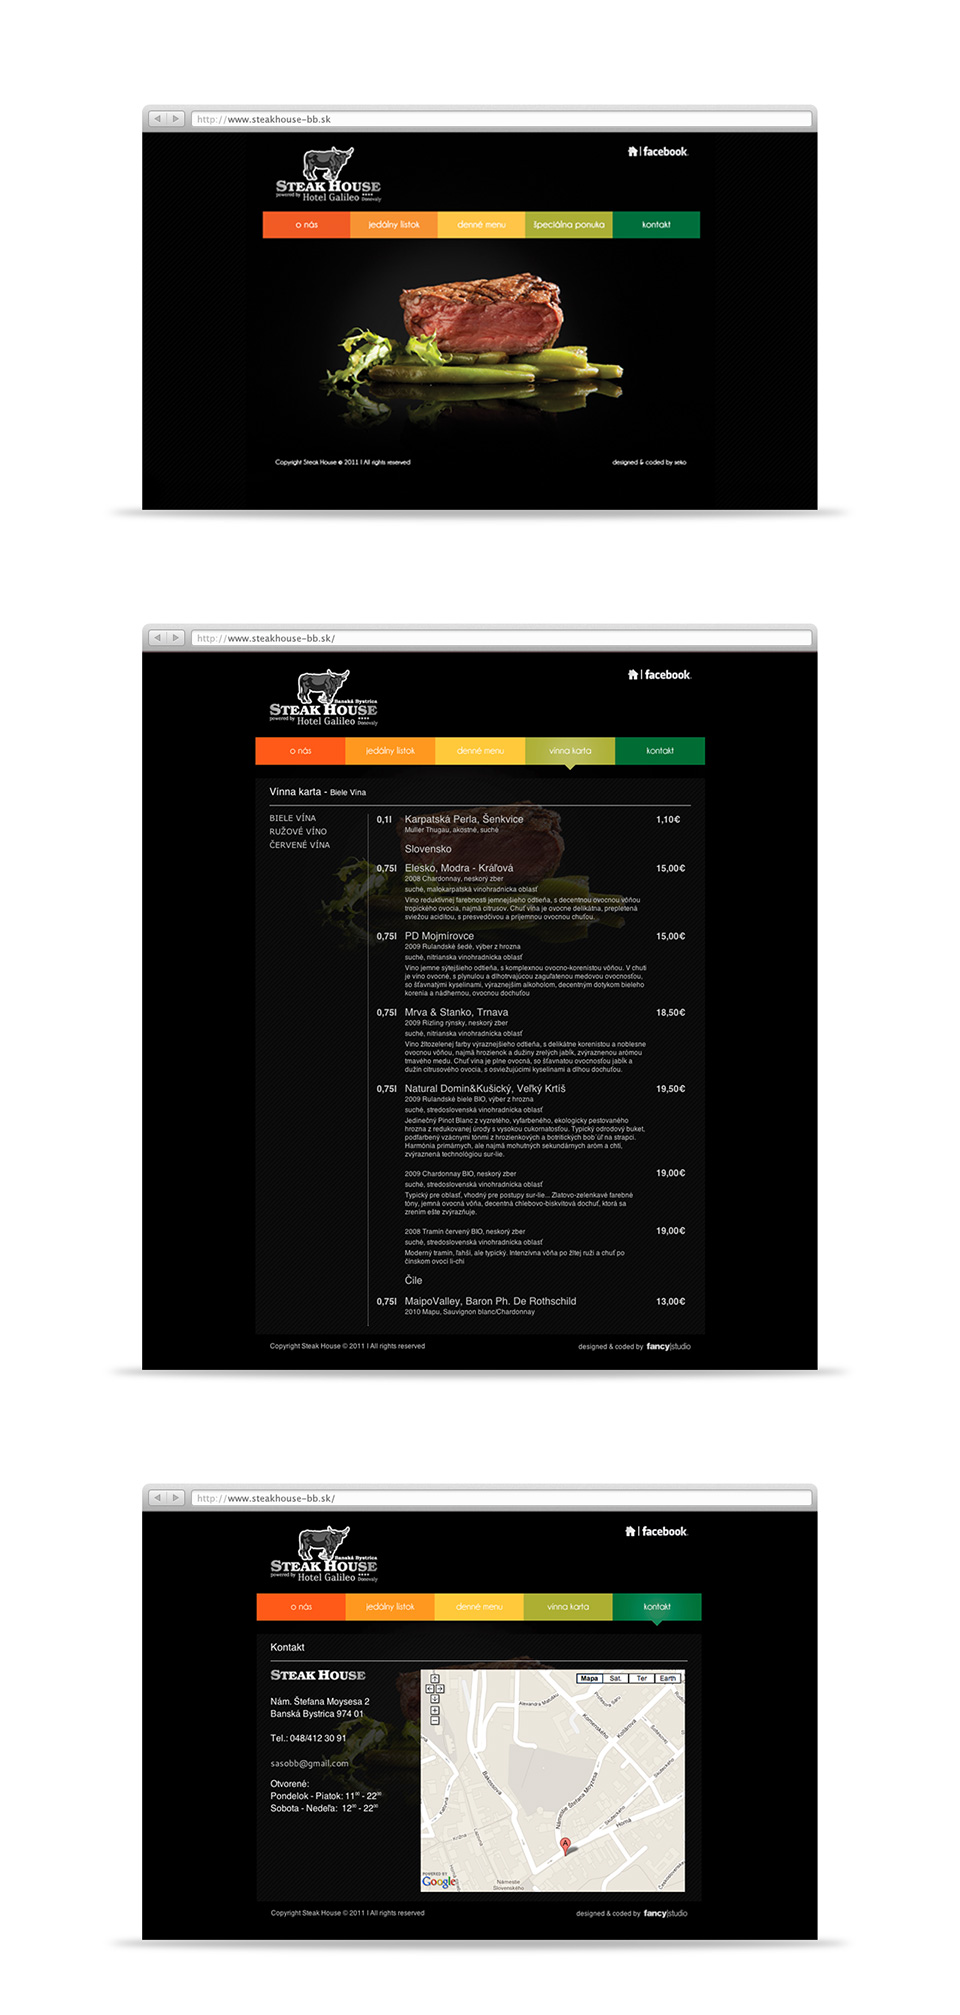 steak house - 
web page